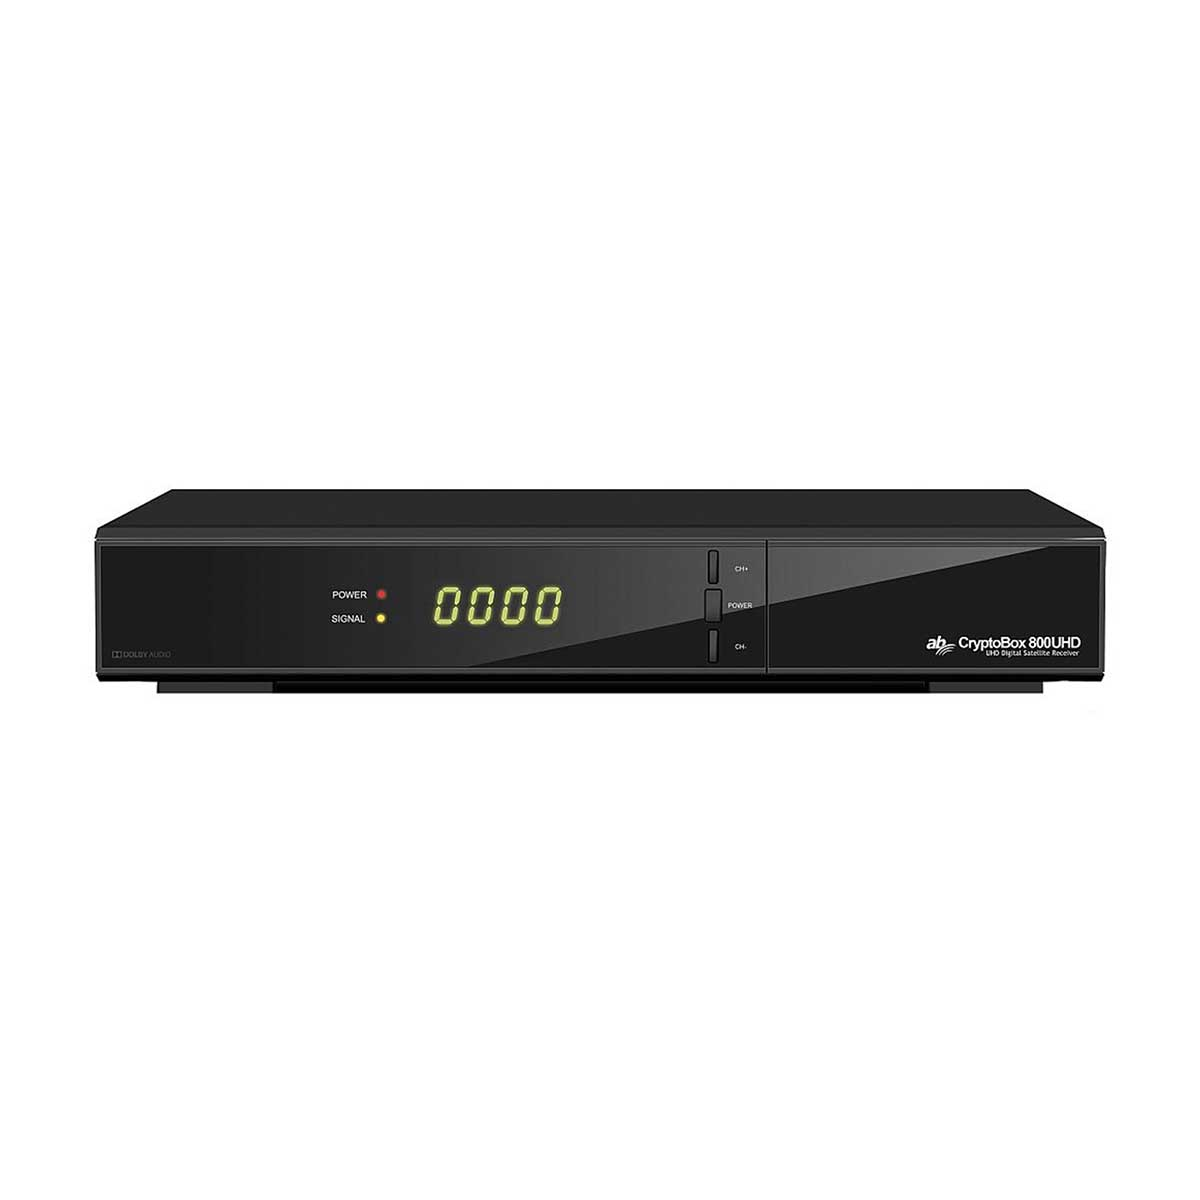 800UHD PVR-Funktion=optional, AB-COM schwarz) CryptoBox (HDTV, Sat-Receiver